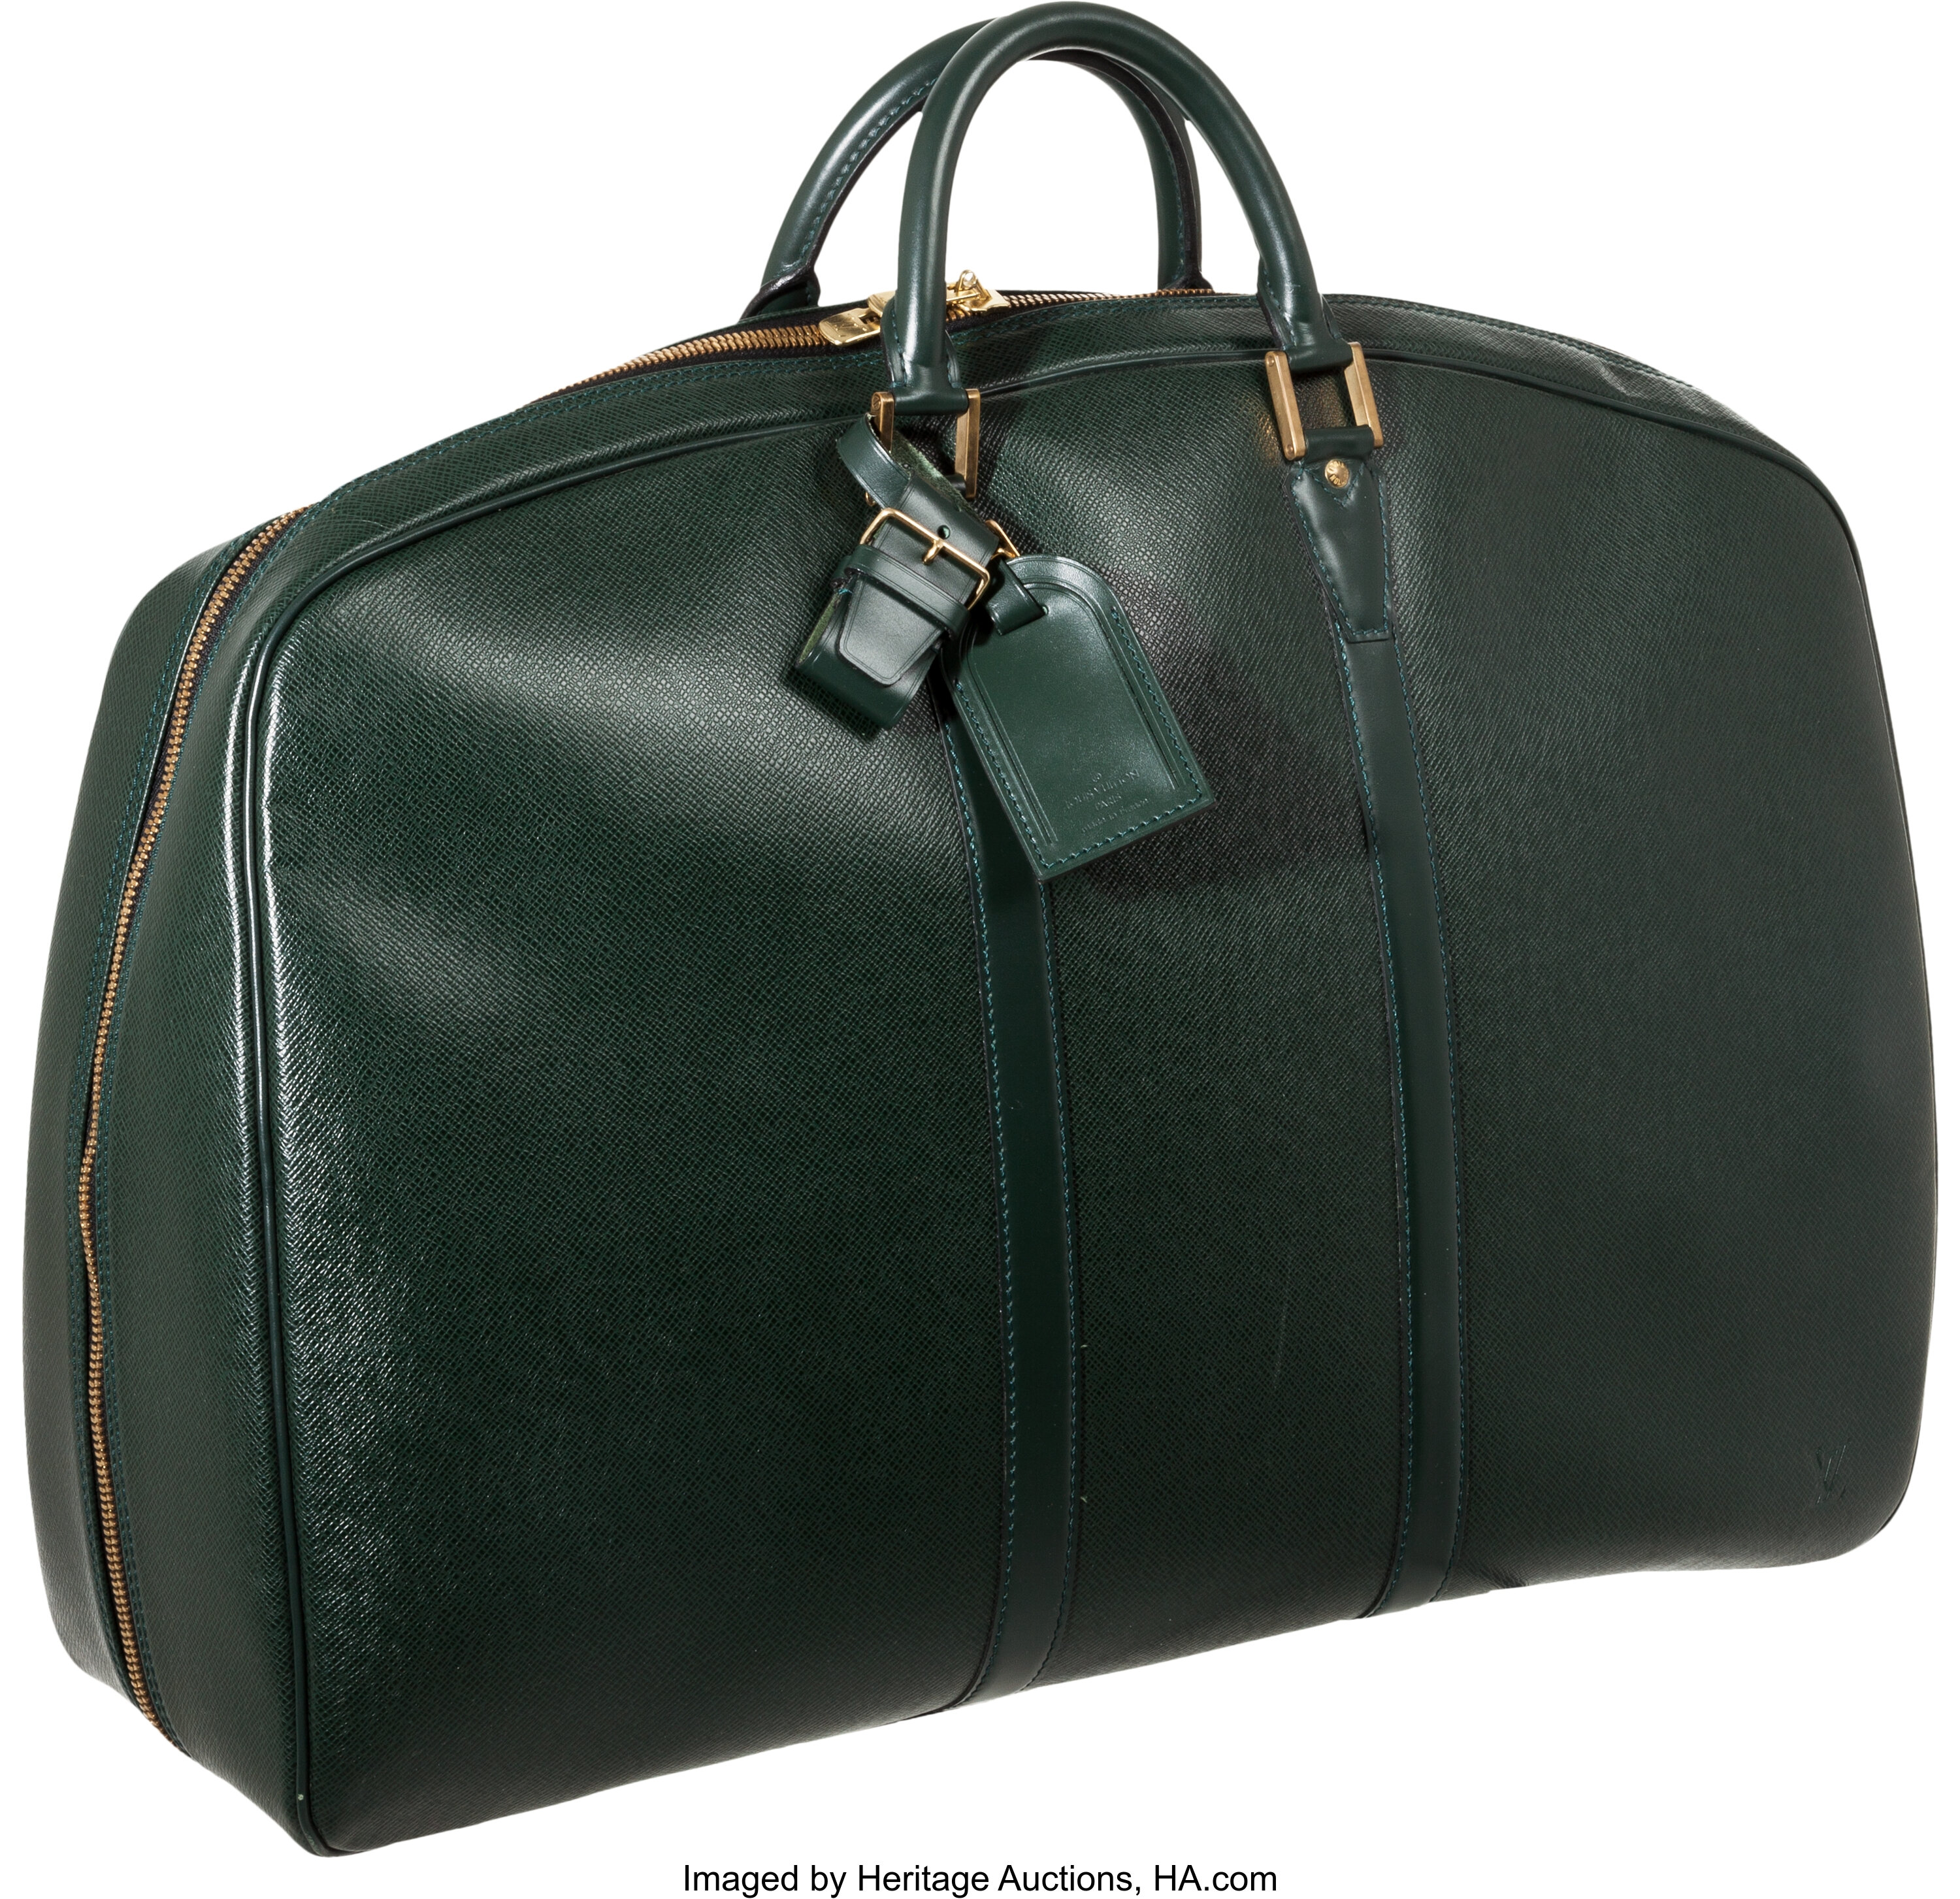 LOUIS VUITTON Green Duffle Bag - Article Consignment